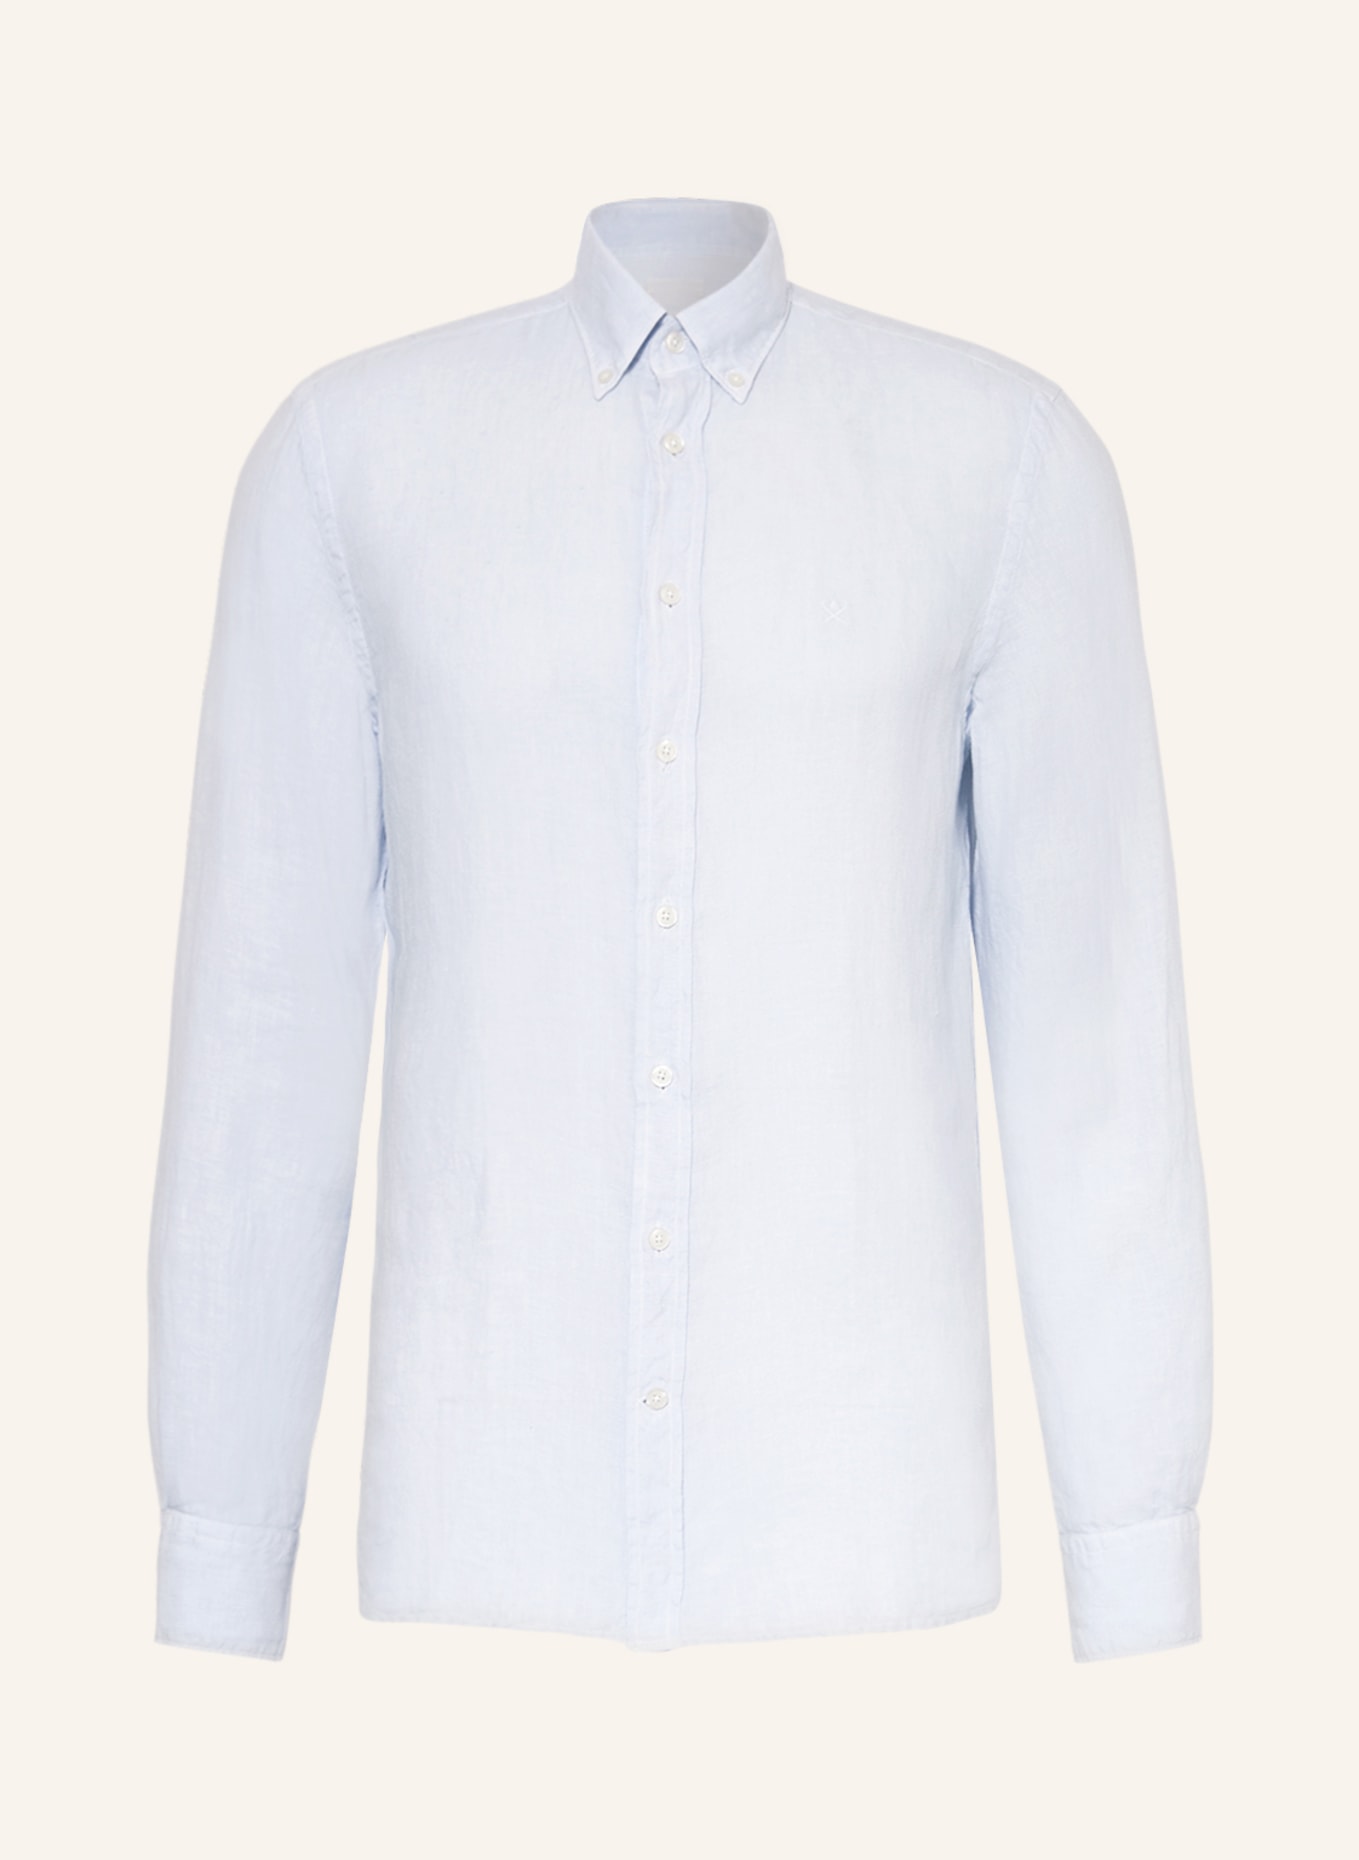 HACKETT LONDON Leinenhemd Slim Fit, Farbe: HELLBLAU (Bild 1)